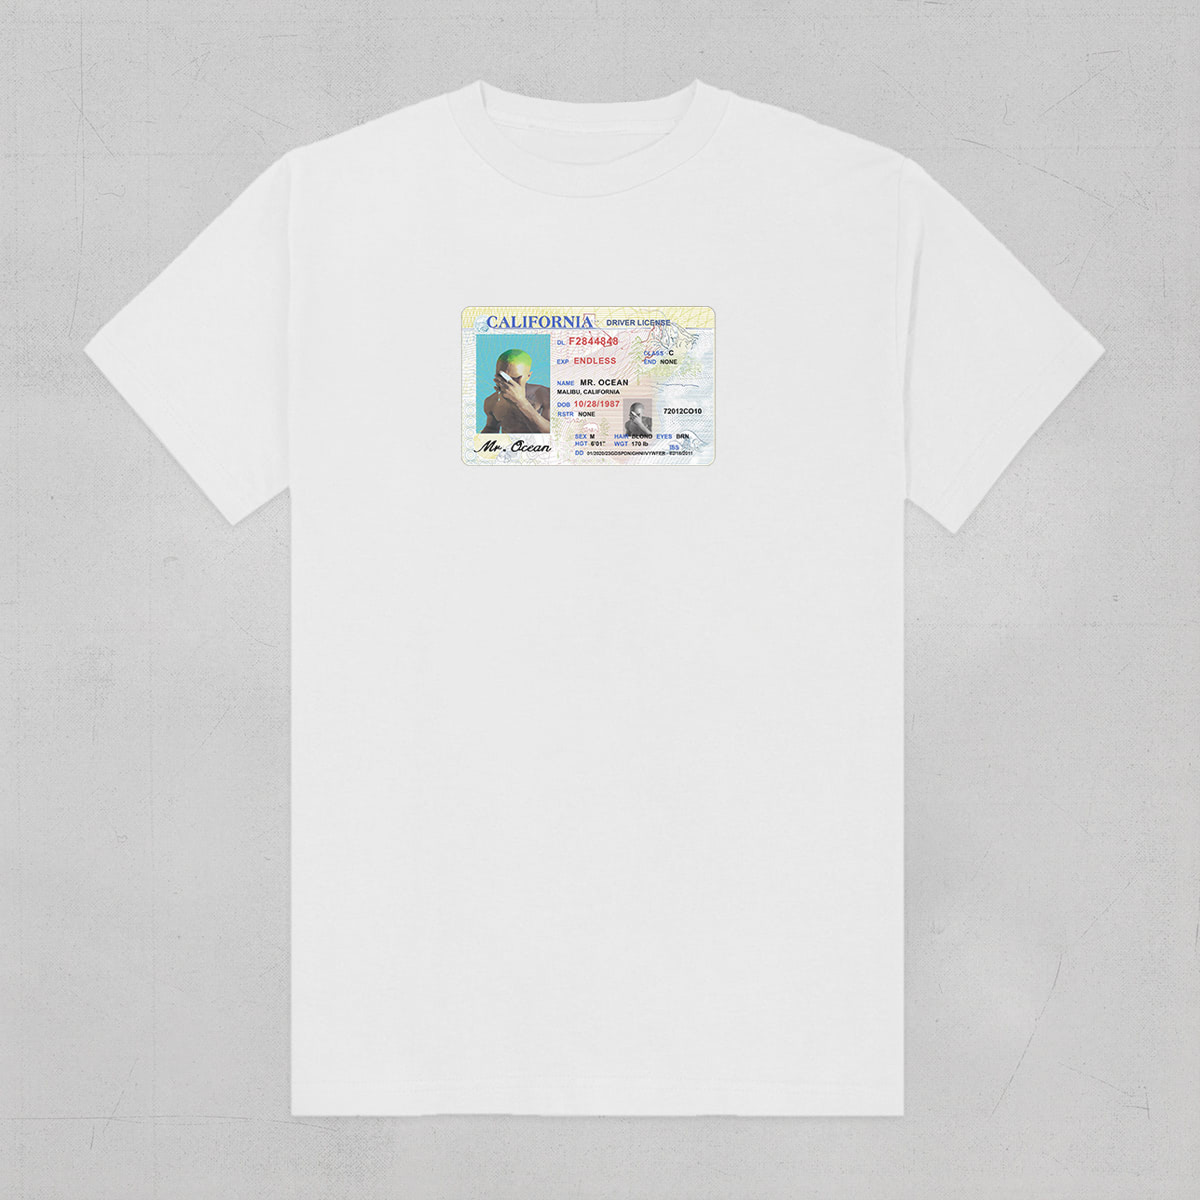 frank ocean license shirt